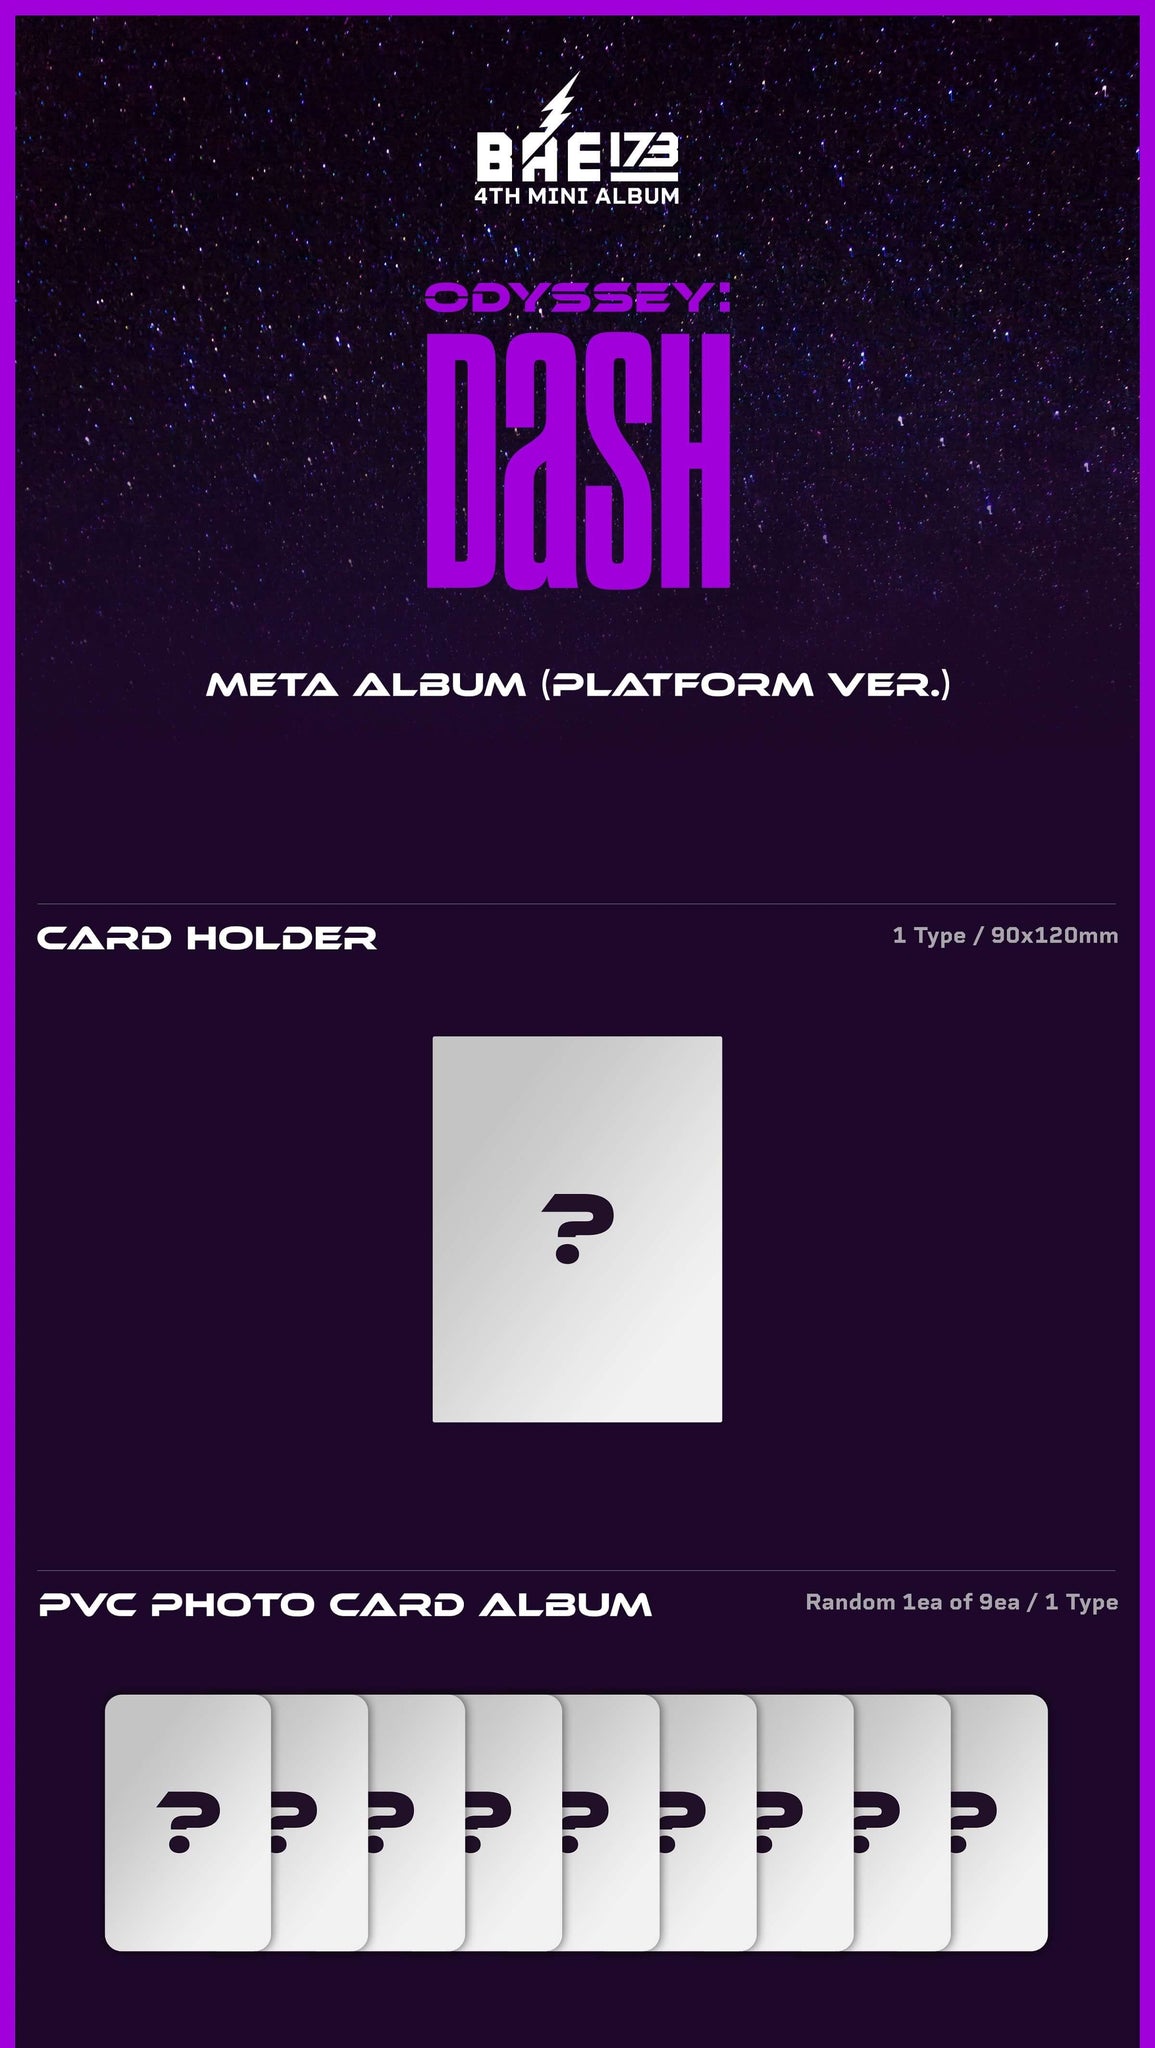 BAE173 ODYSSEY: DaSH Platform Version Inclusions Card Holder PVC Photocard Album